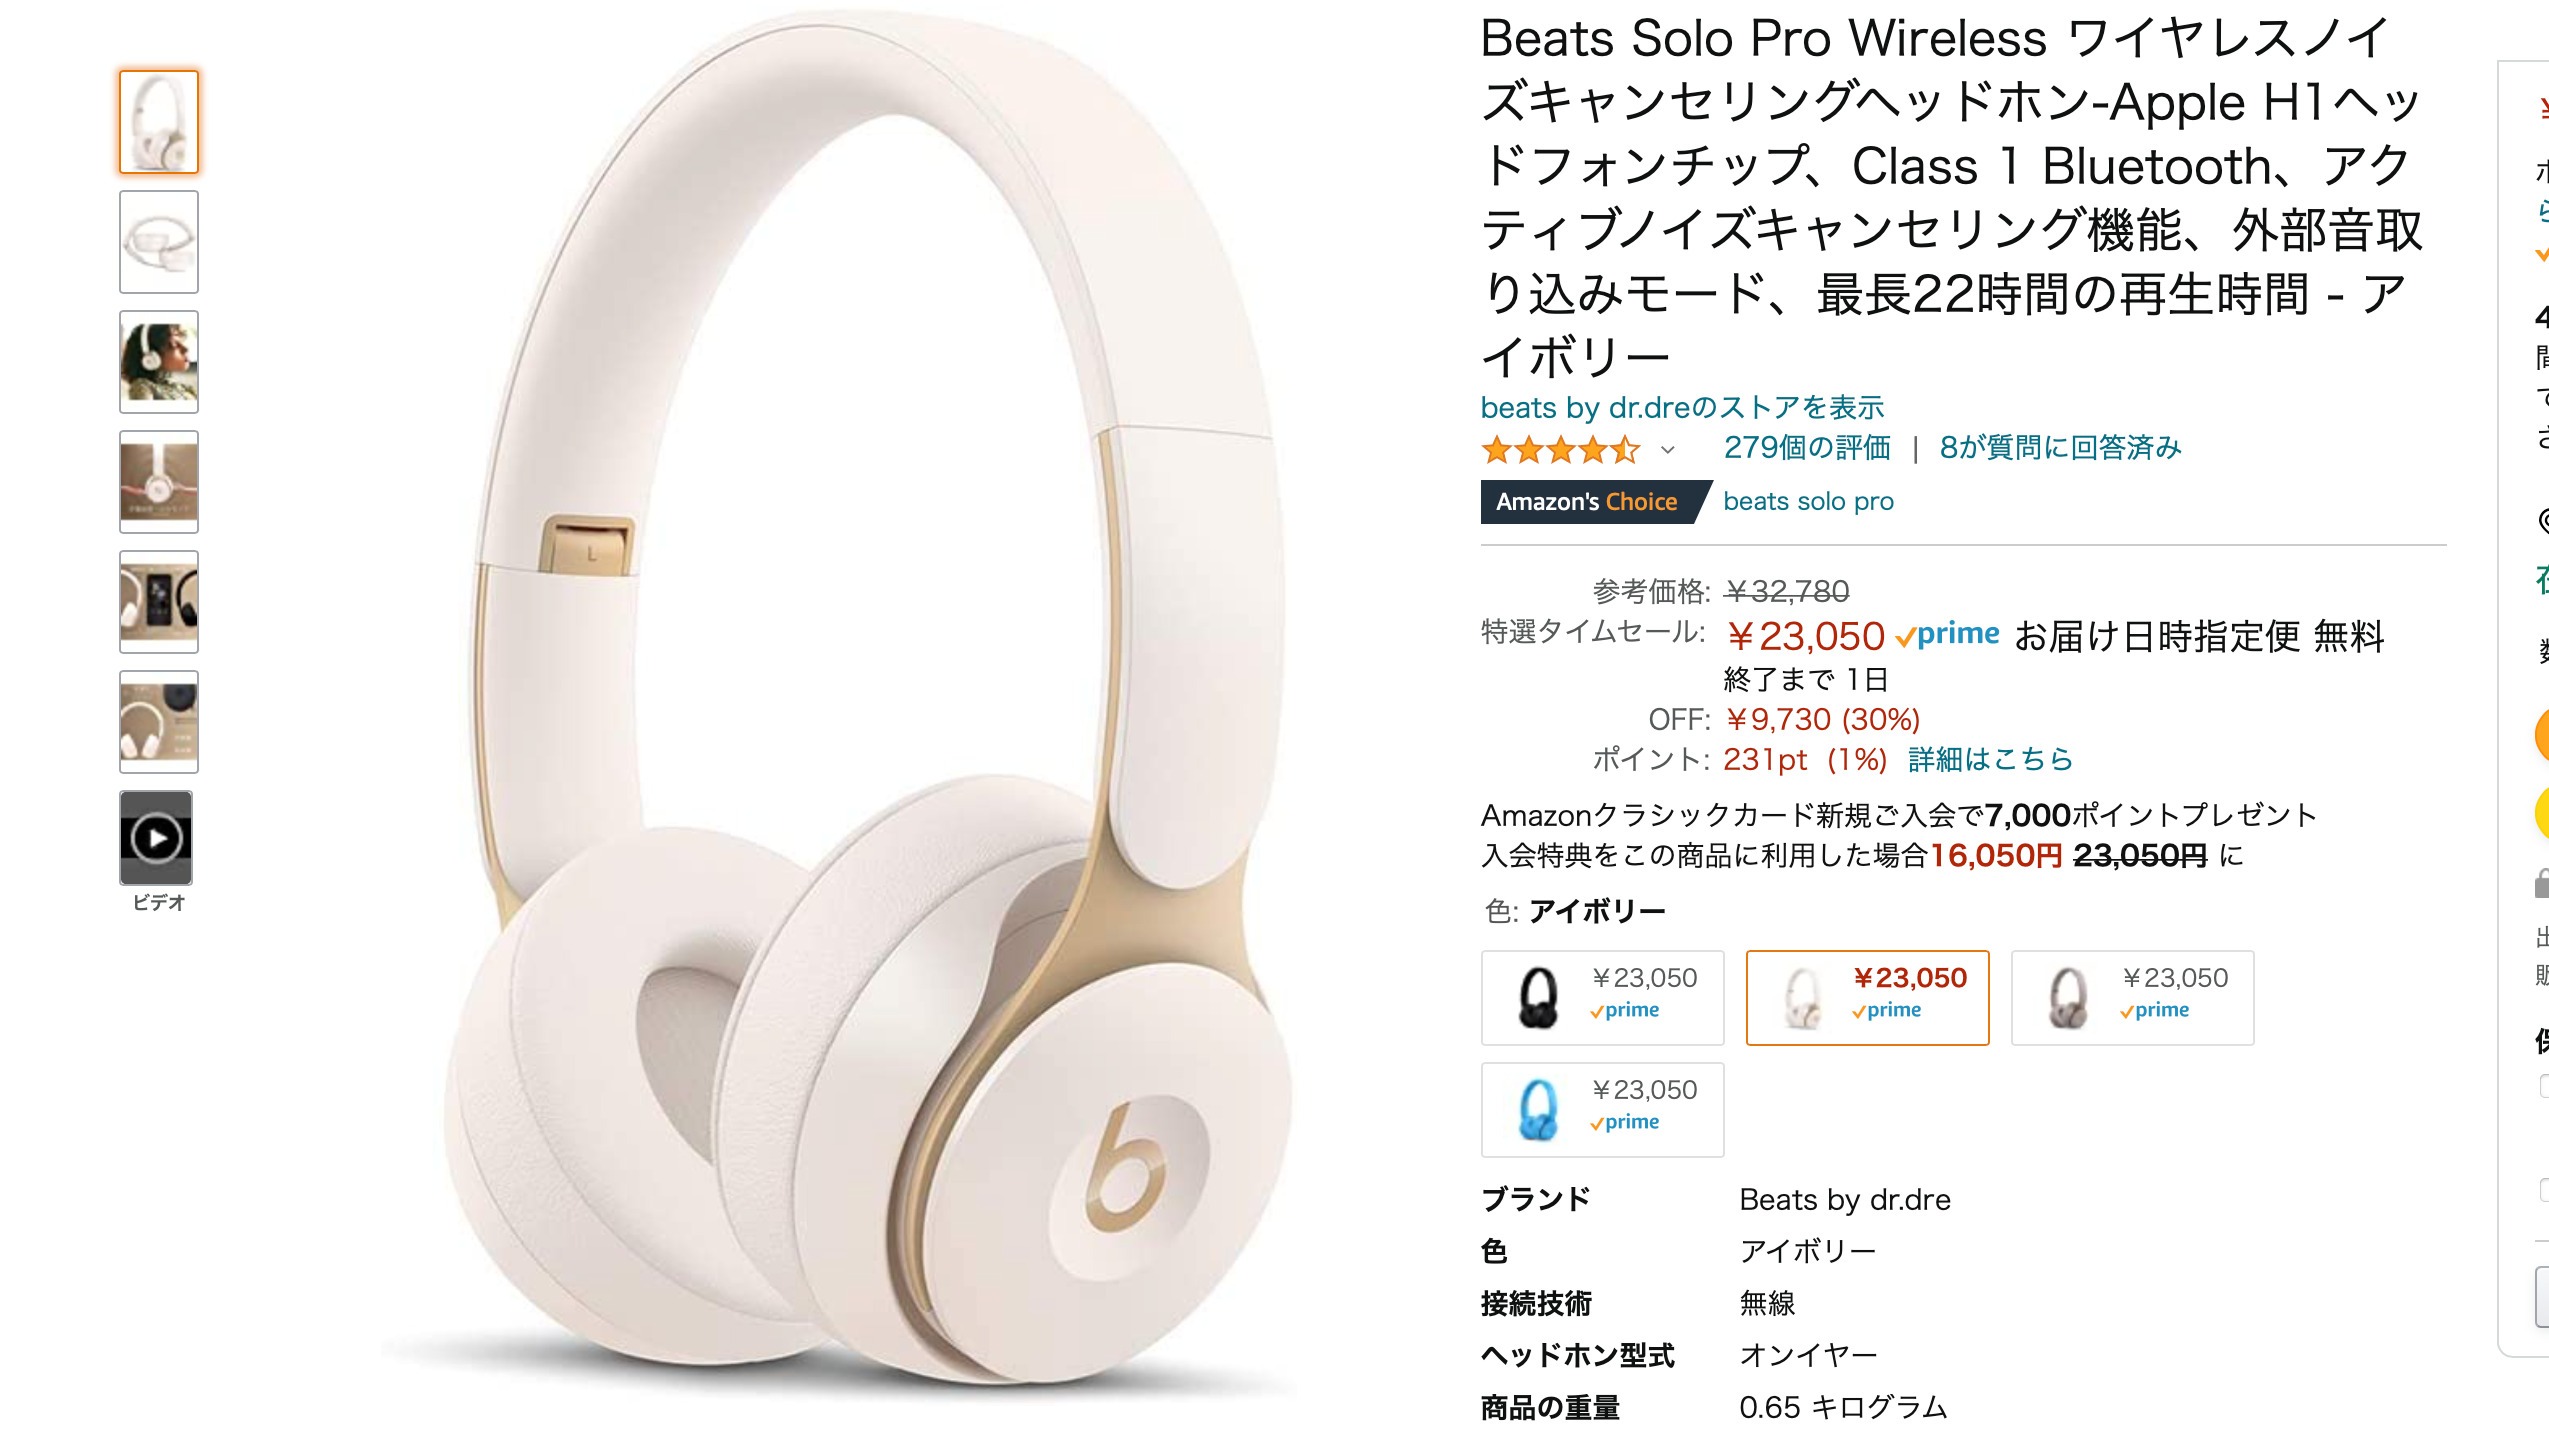 Beats Solo Pro Amazon